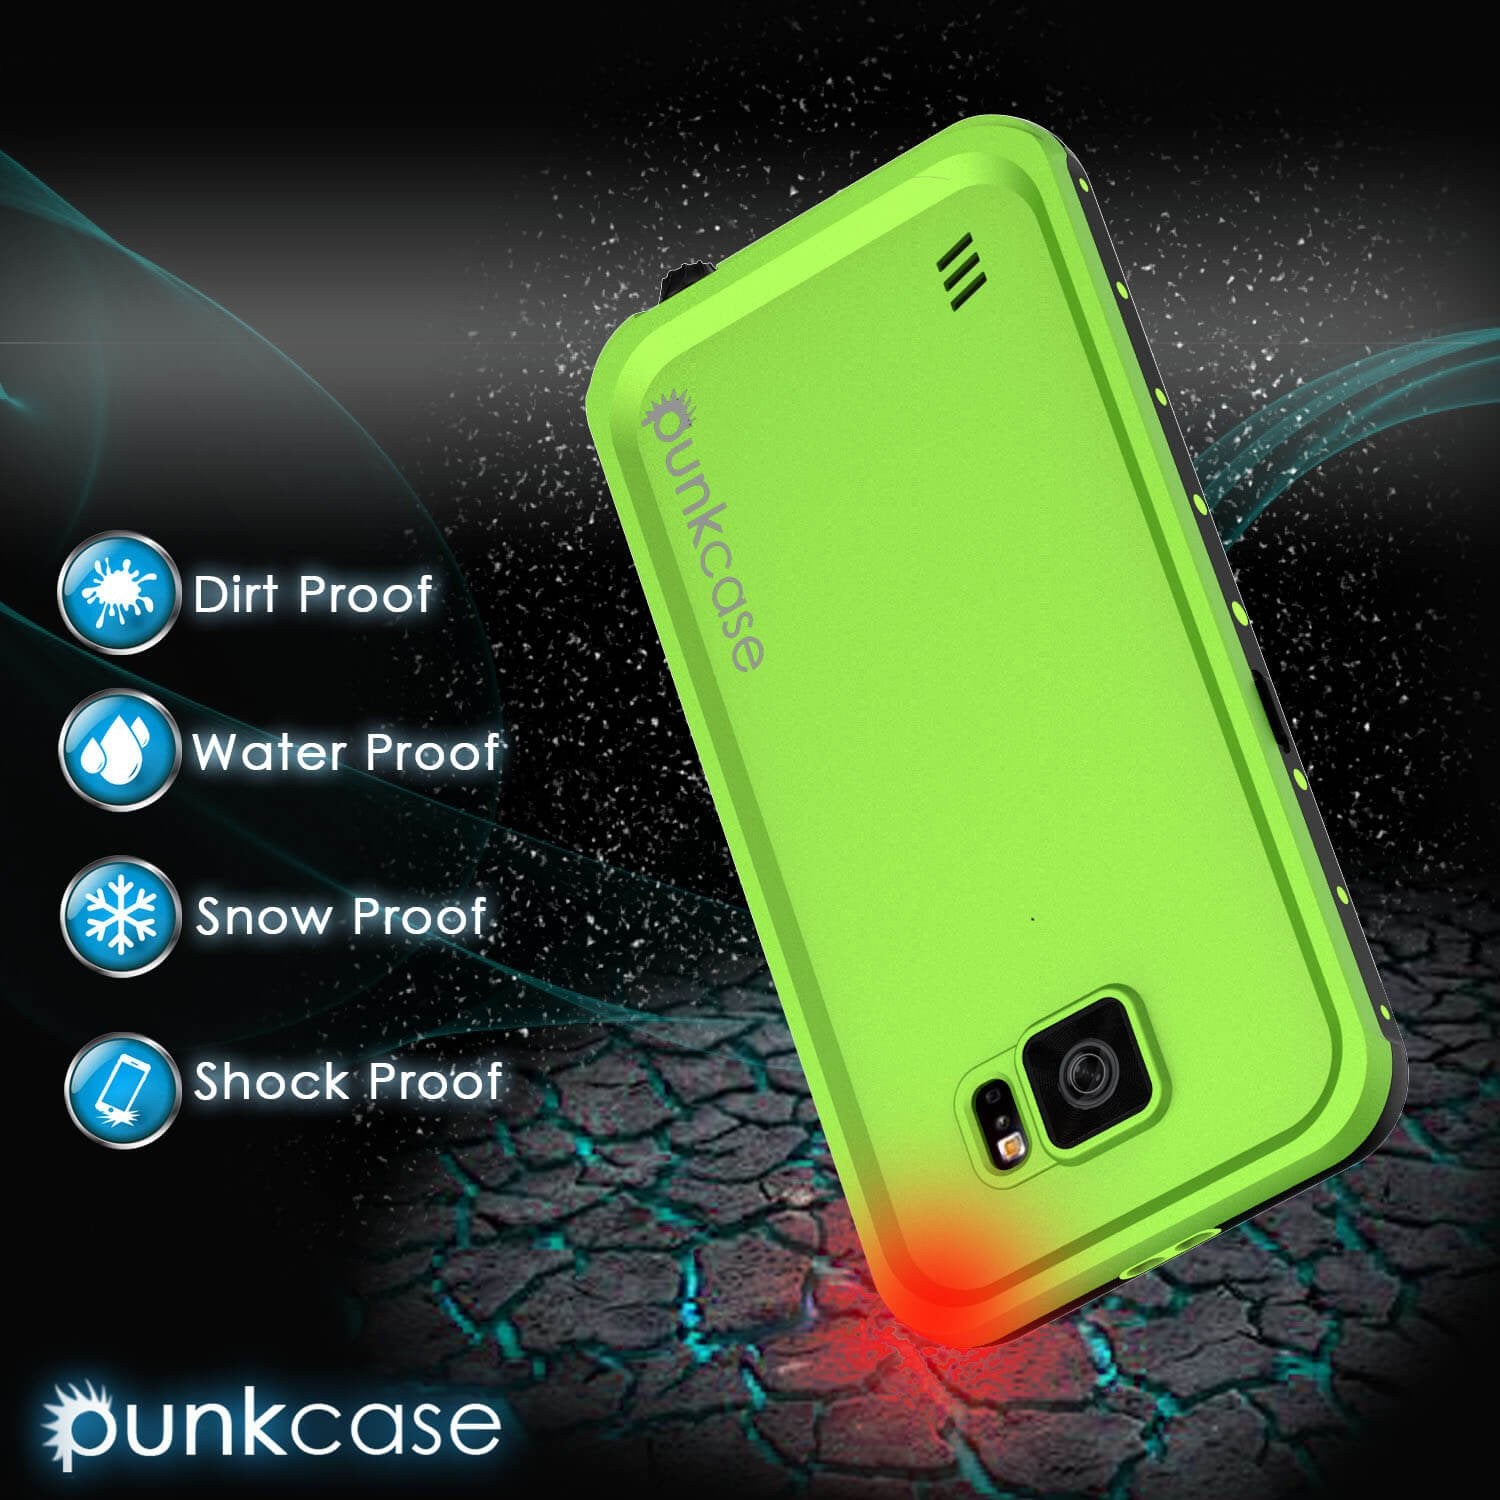 Galaxy S6 Waterproof Case PunkCase StudStar Light Green Thin 6.6ft Underwater IP68 Shock/Dirt Proof